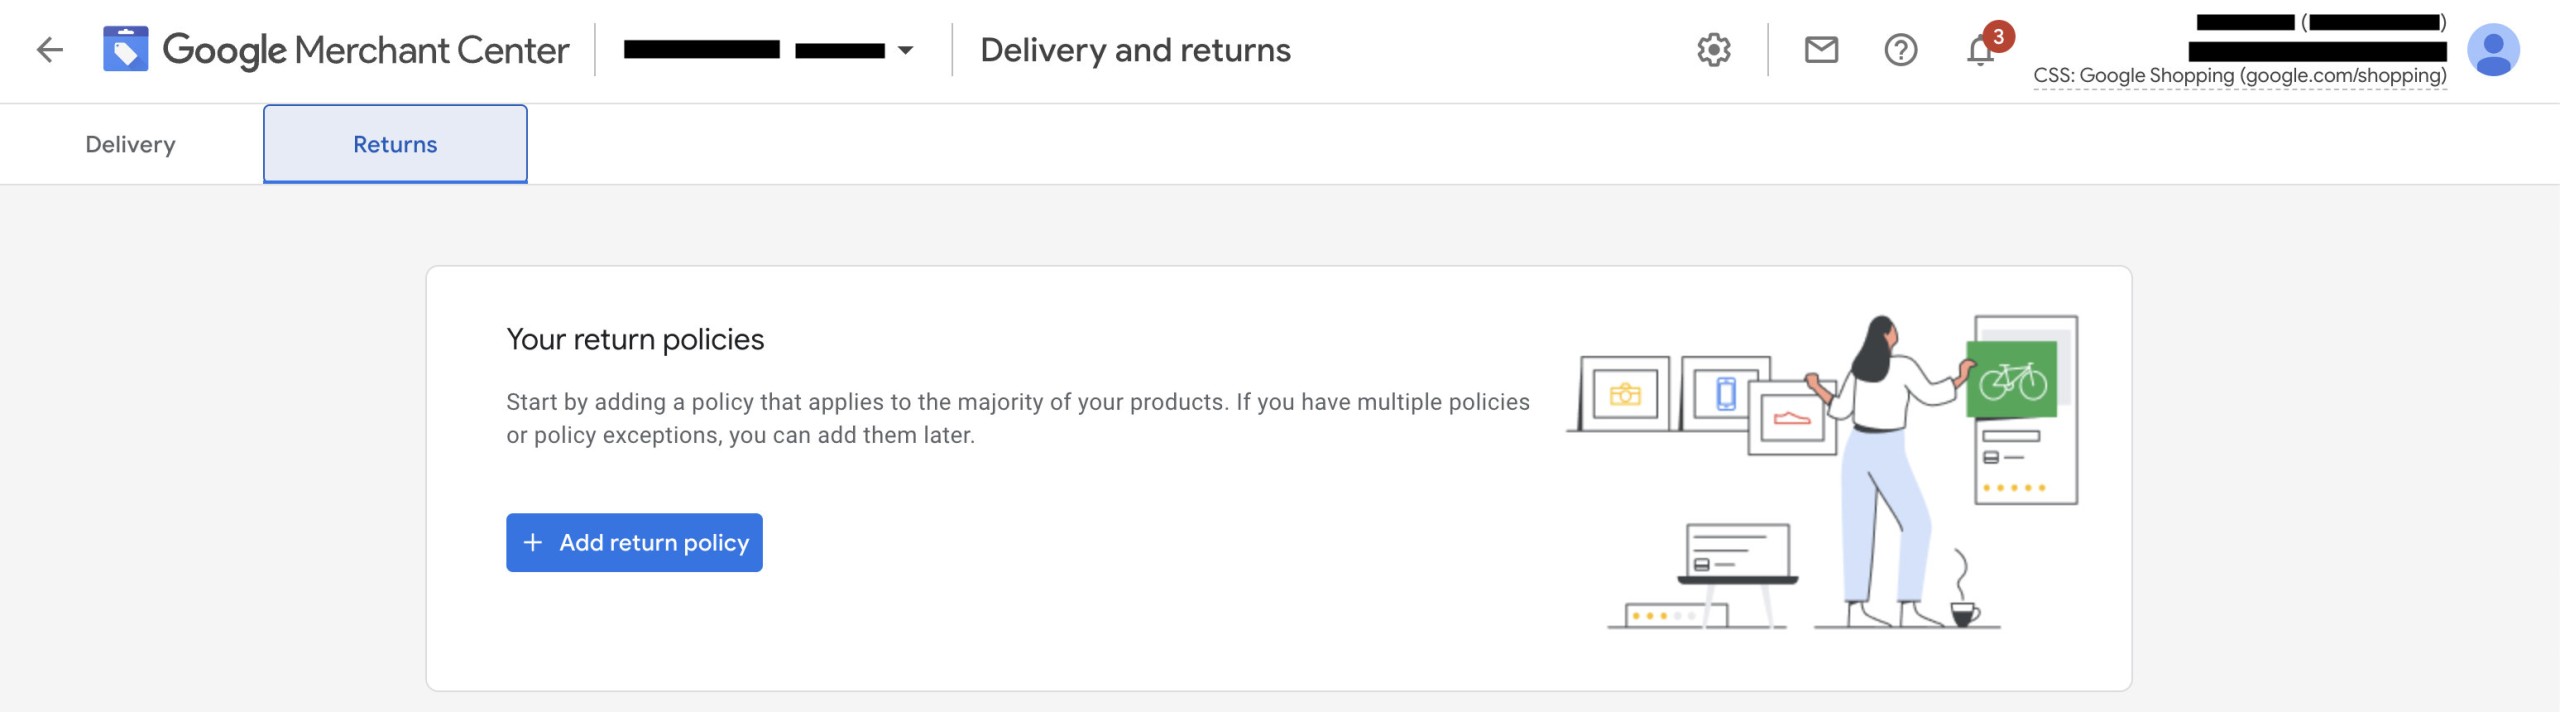 Screen shot of Returns policy settings in Google Merchant Center